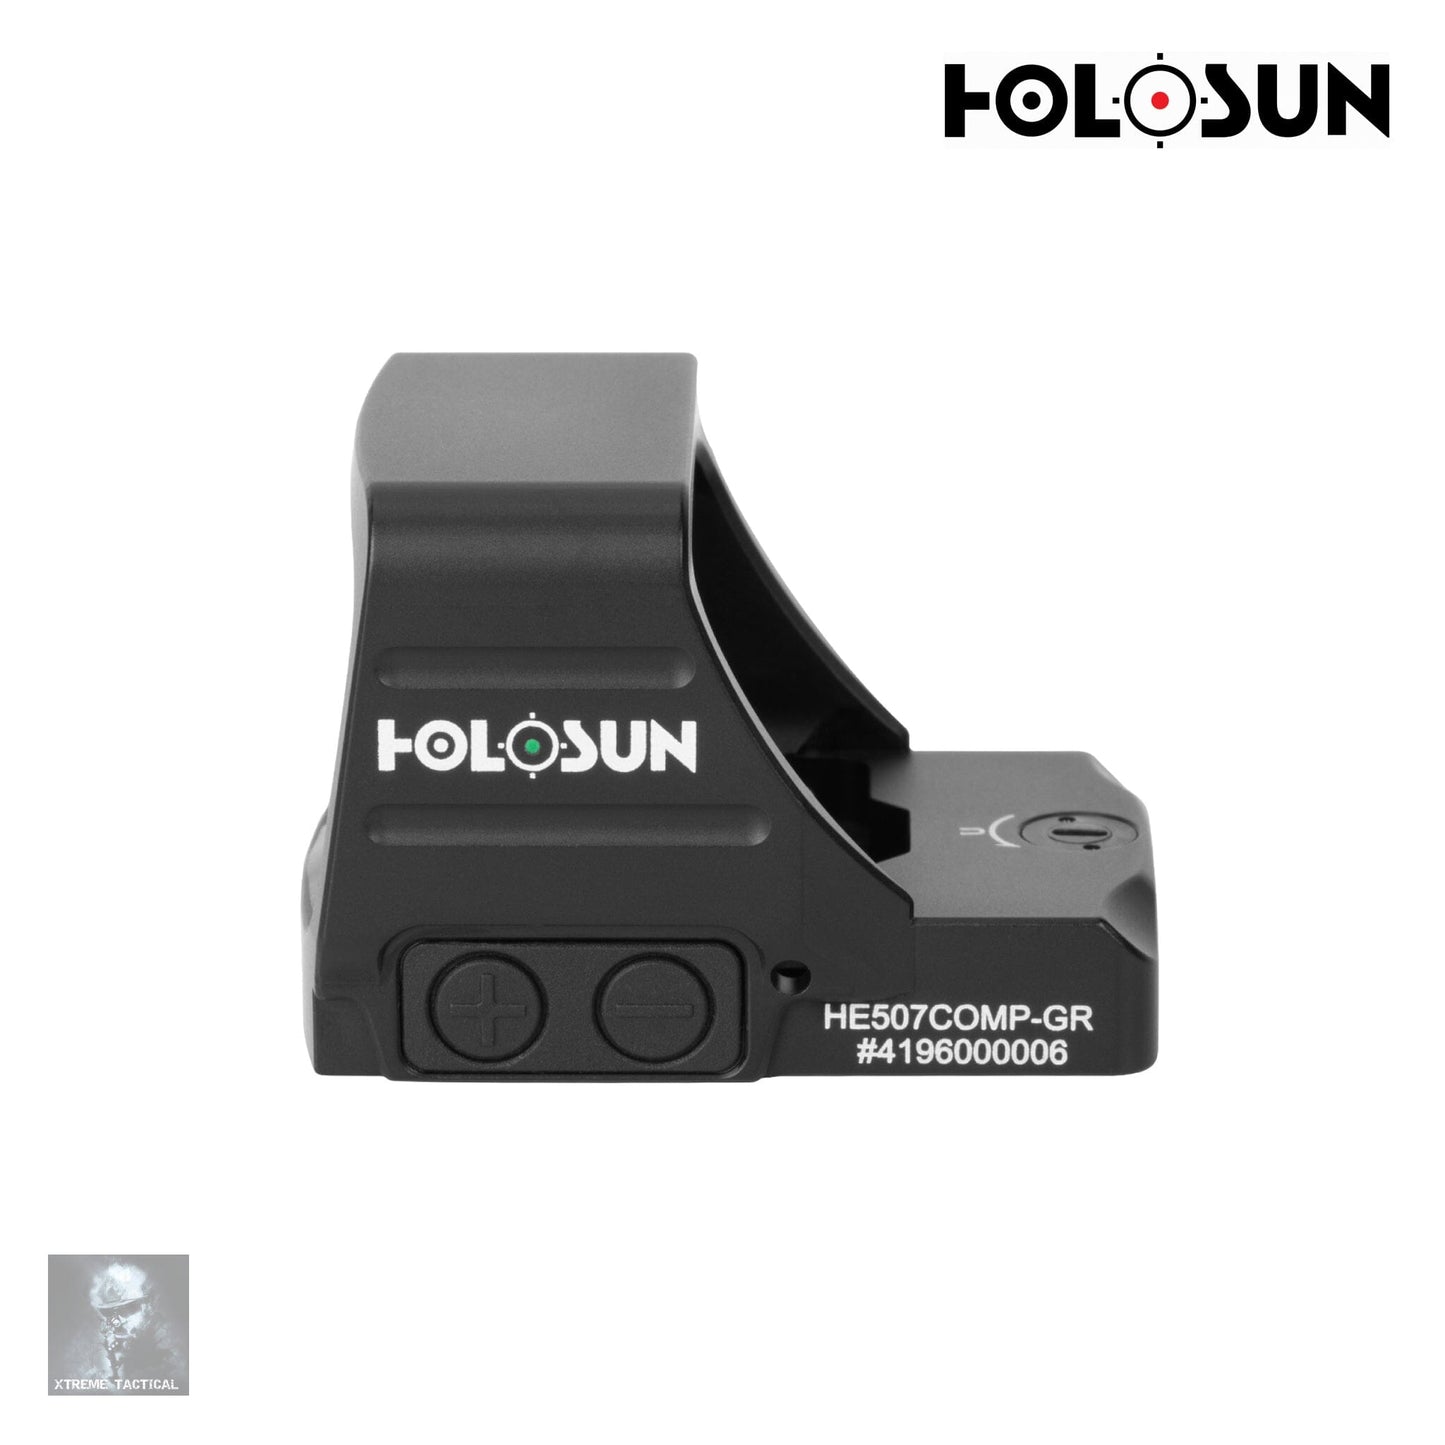 Holosun HE507COMP-GR Handgun Sight Green Reticle Green Dot Sight Holosun Technologies 